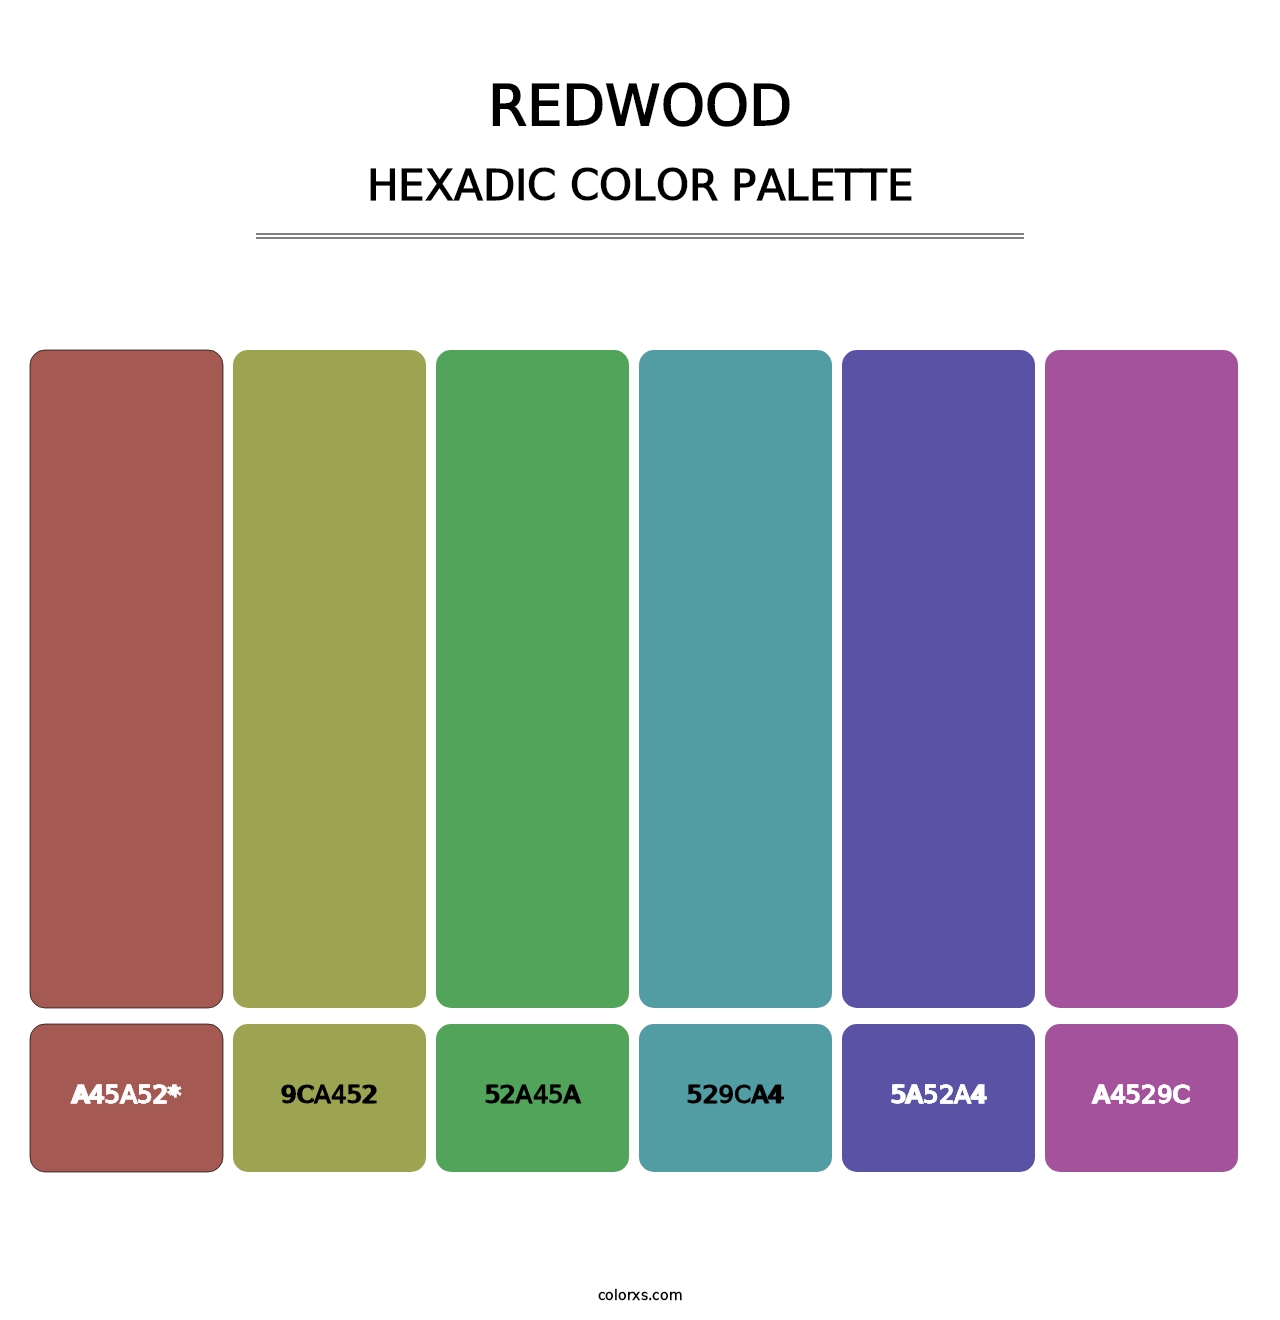 Redwood - Hexadic Color Palette